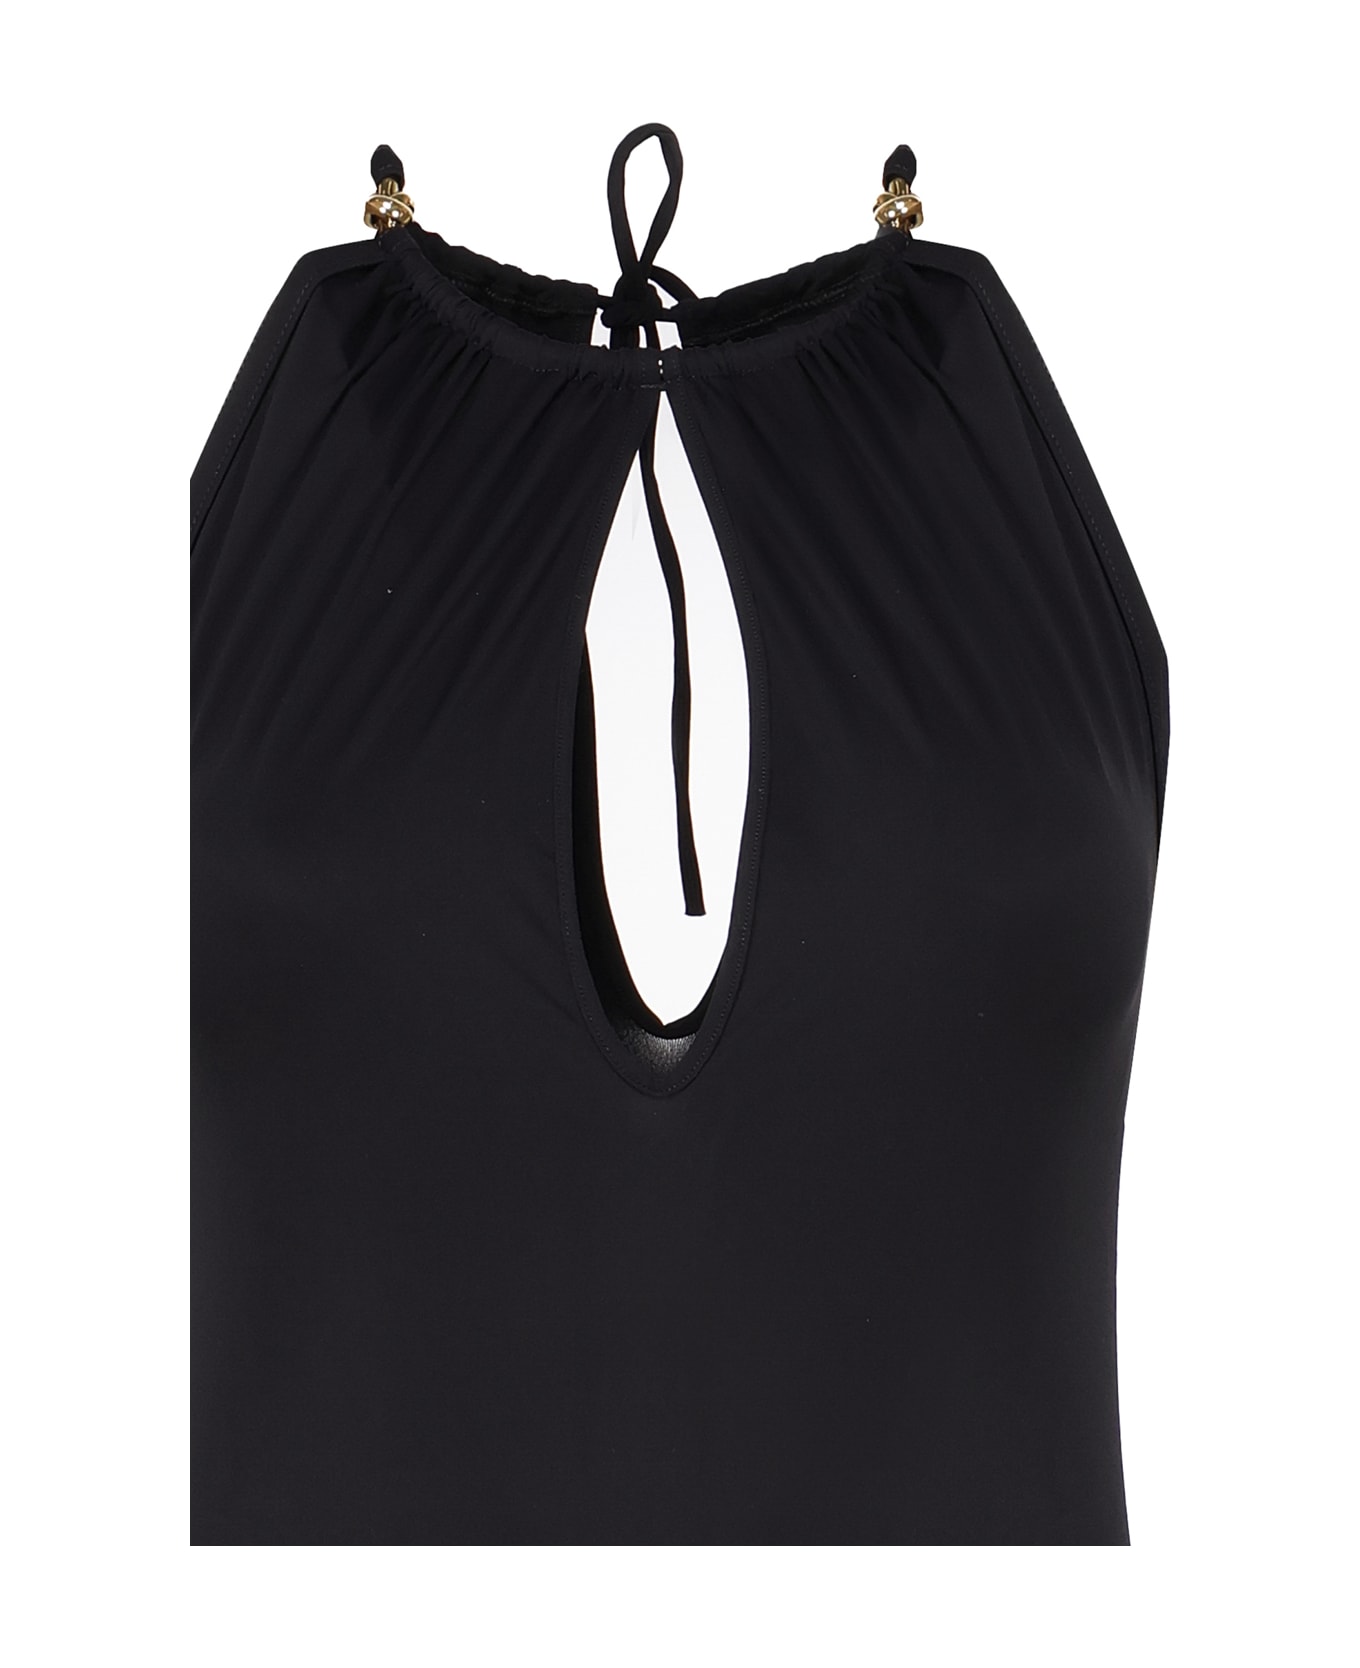 Bottega Veneta Knot One-piece Swimsuit - Black